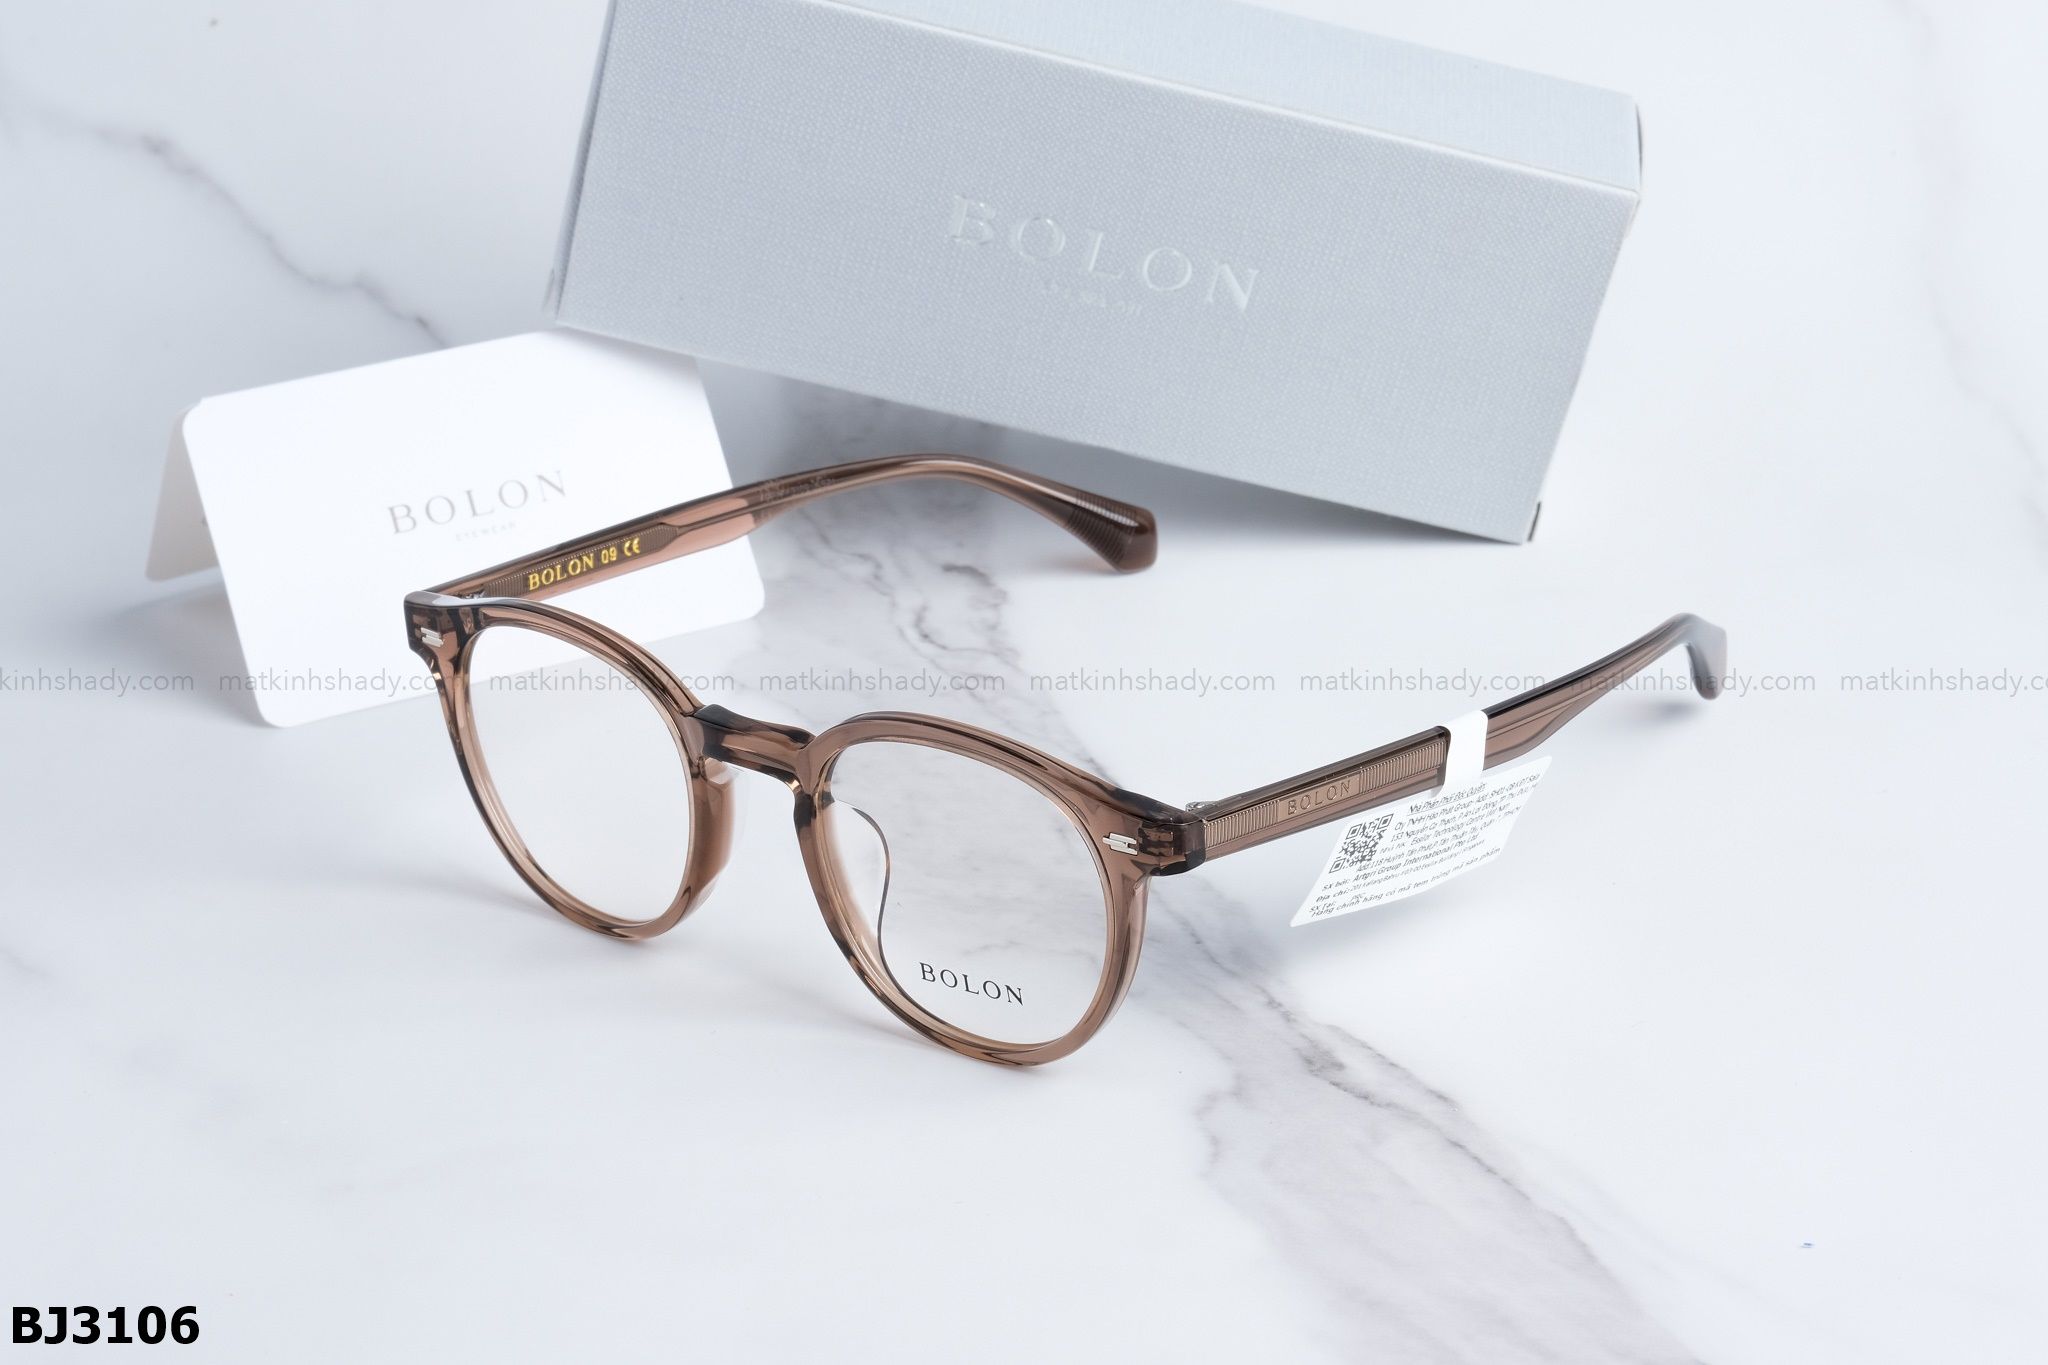  Bolon Eyewear - Glasses - BJ3106 